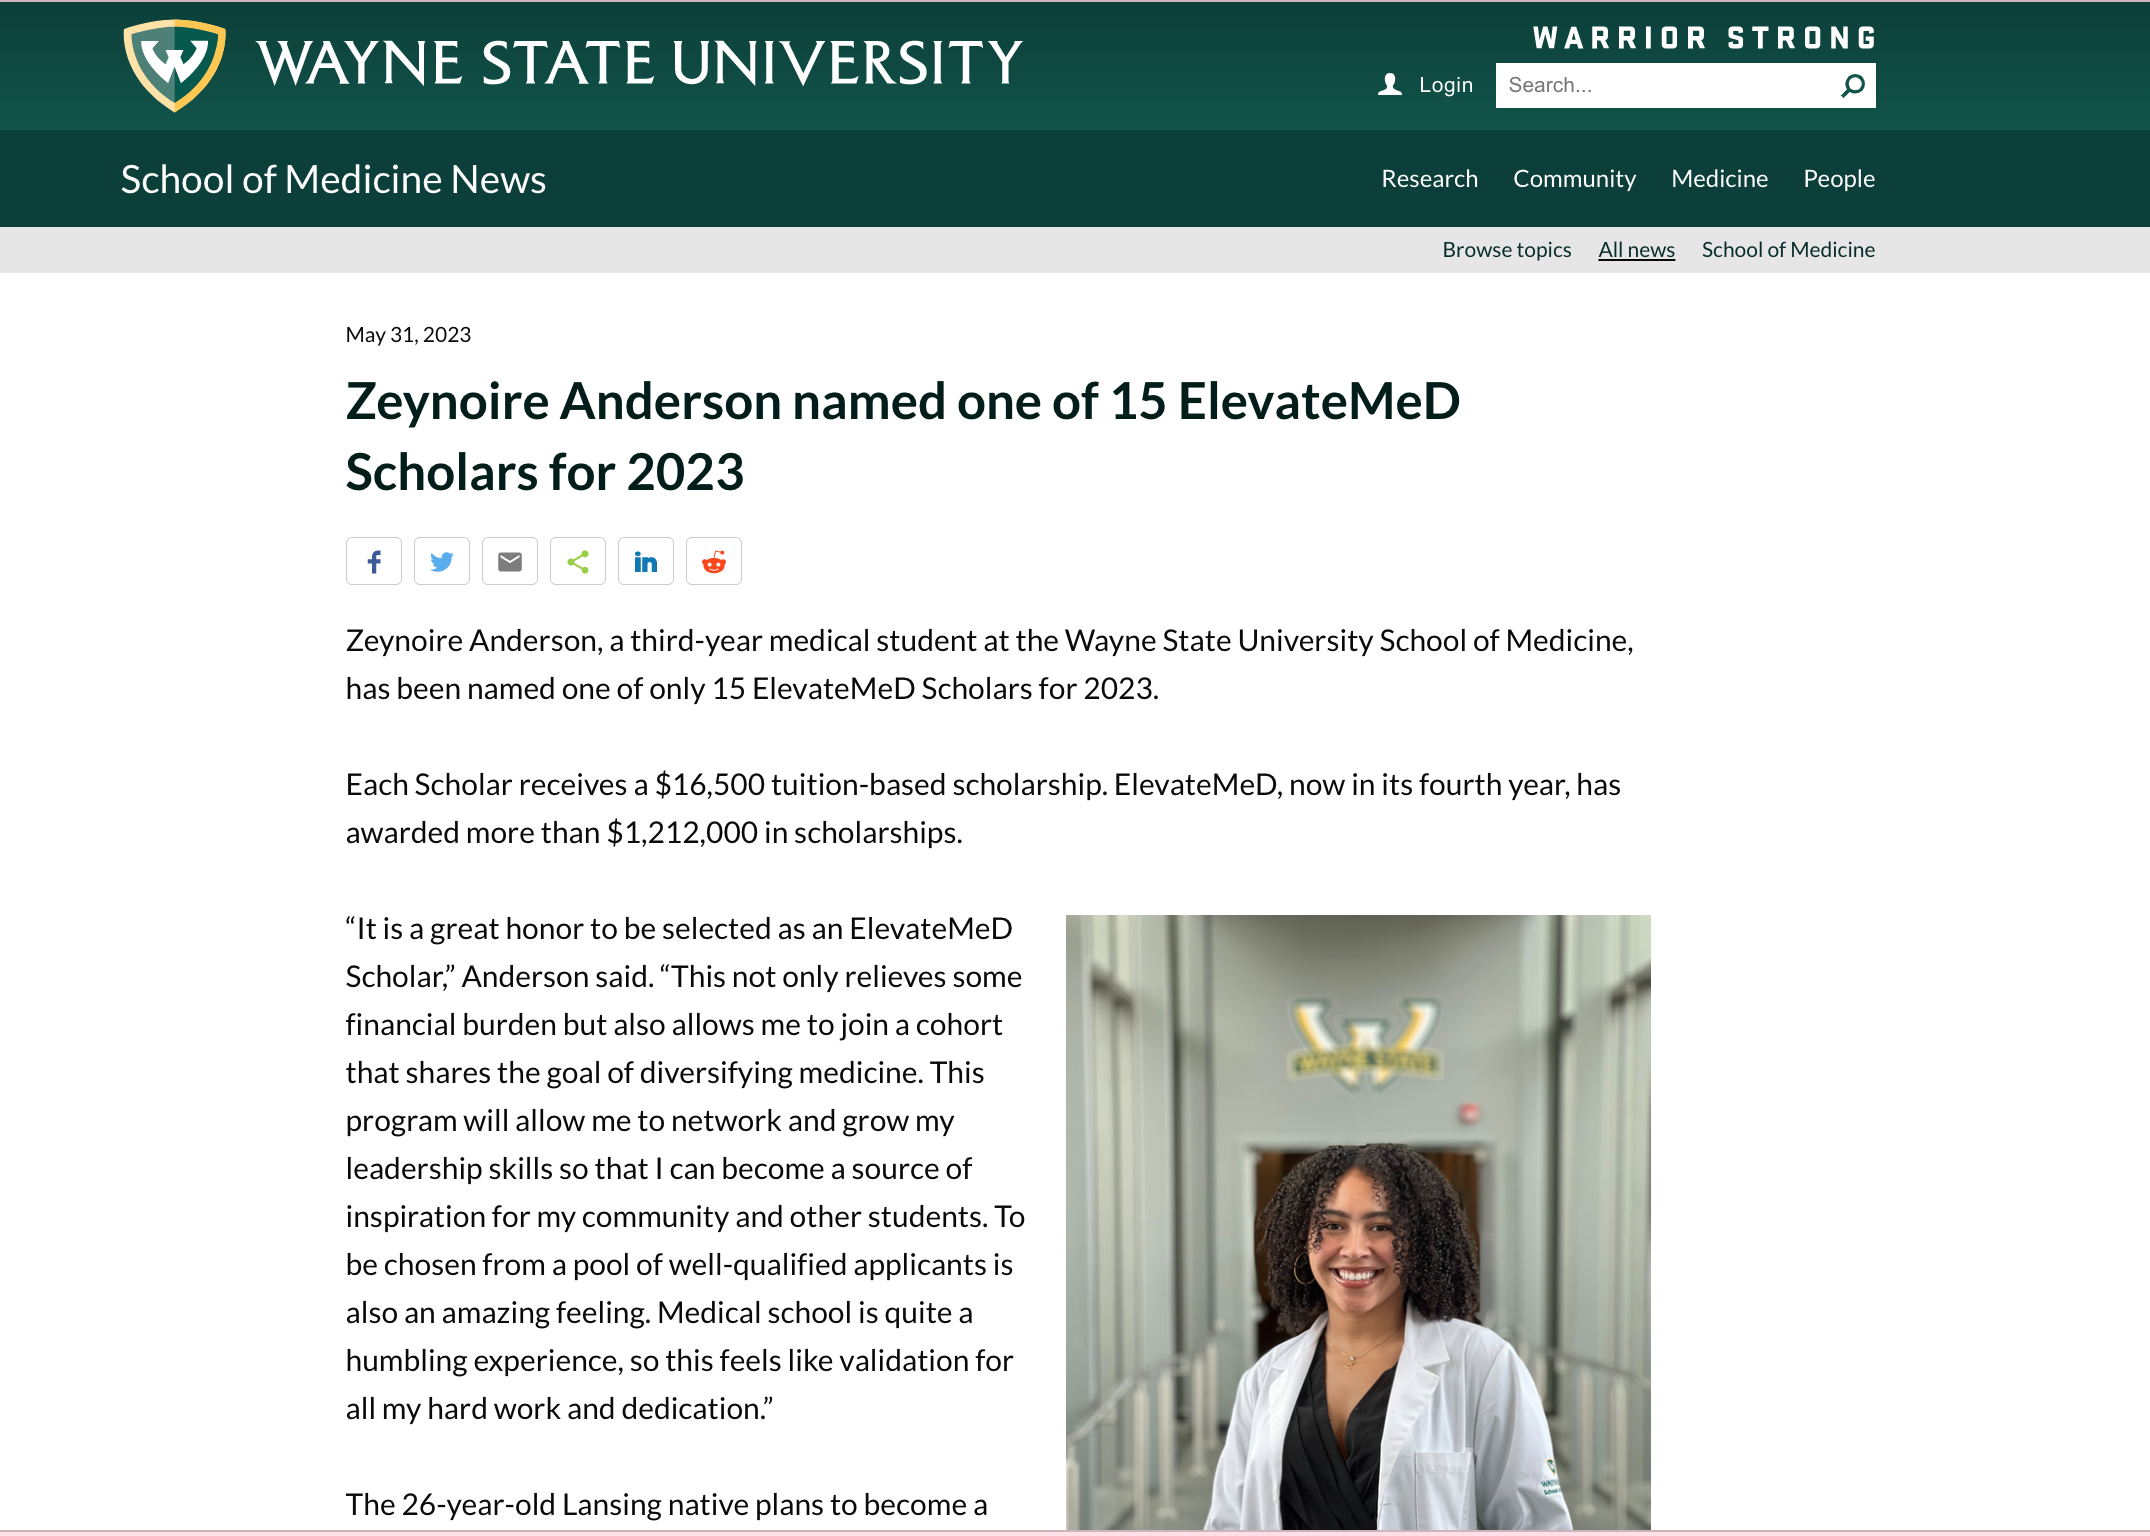 Wayne State University | ElevateMeD Scholar Zeynoire Anderson